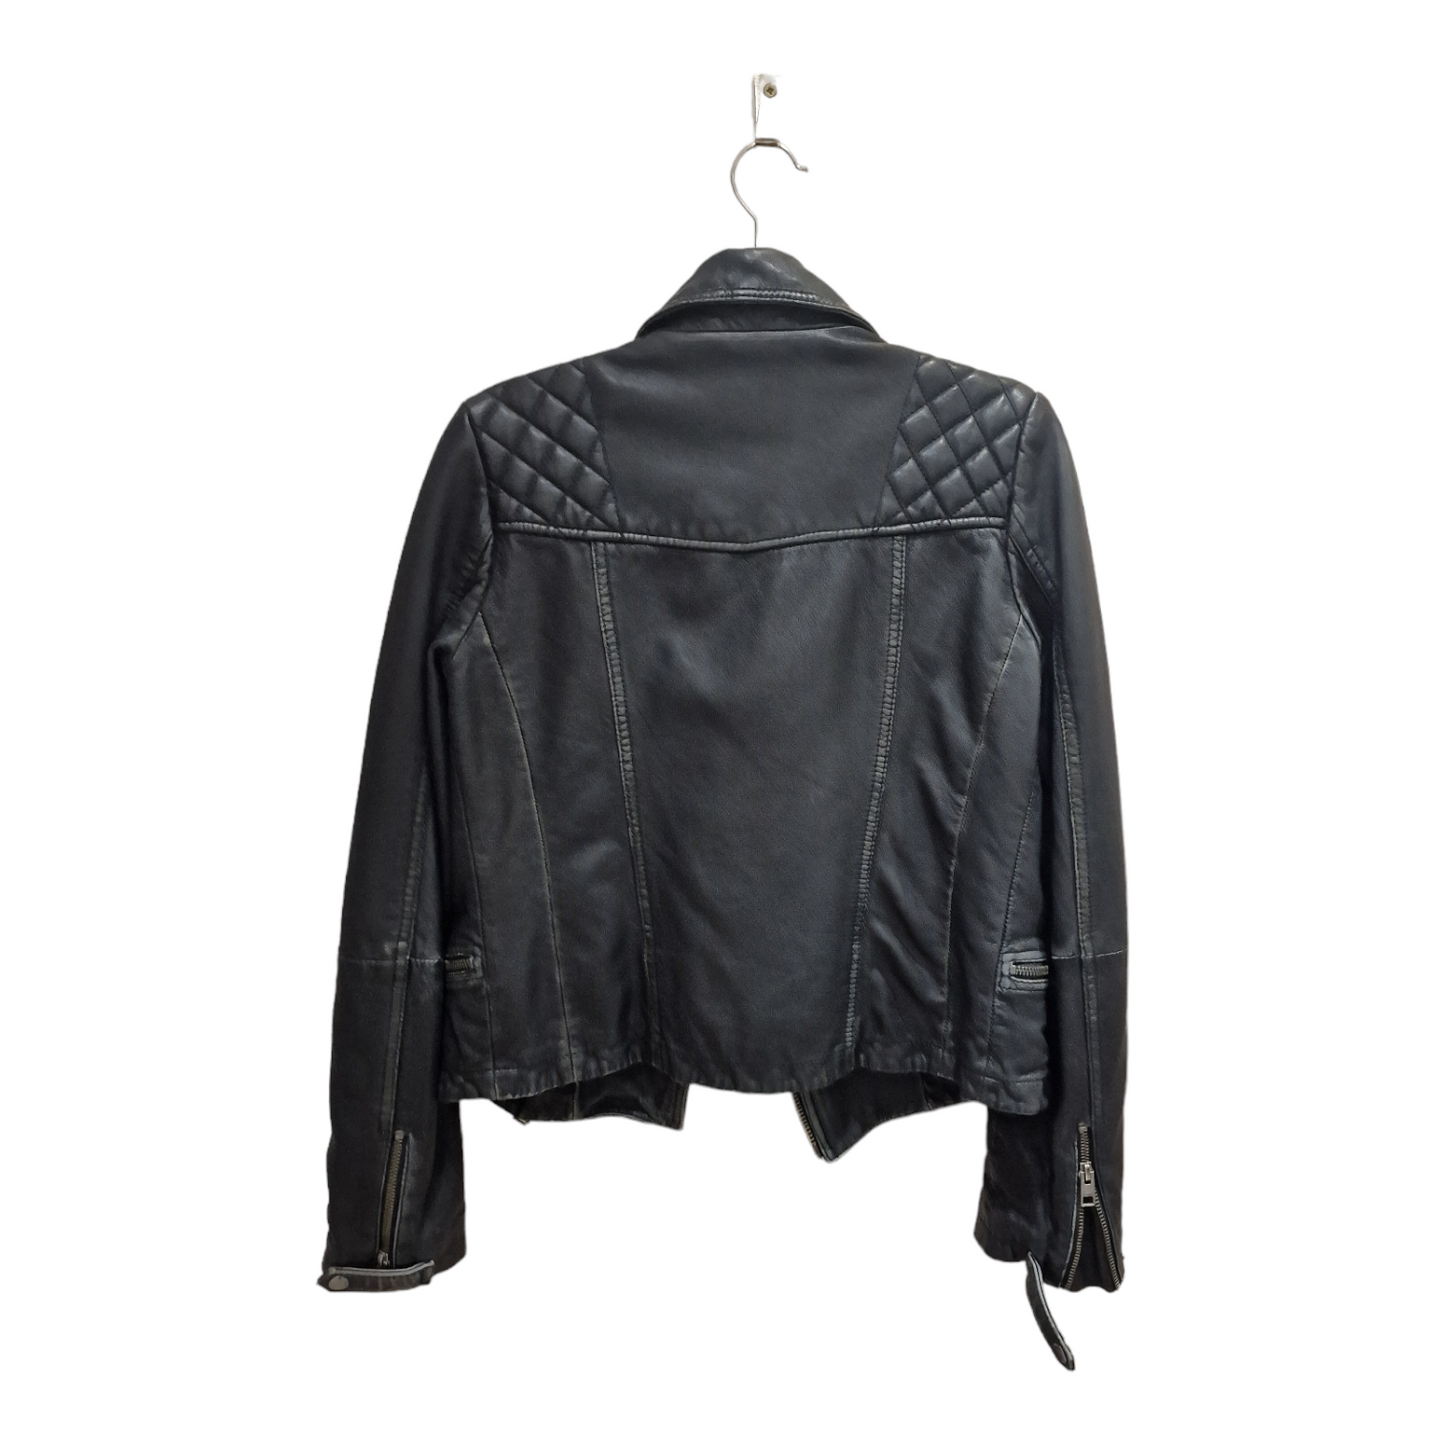 All Saint's Black Cargo Biker Jacket, size 6